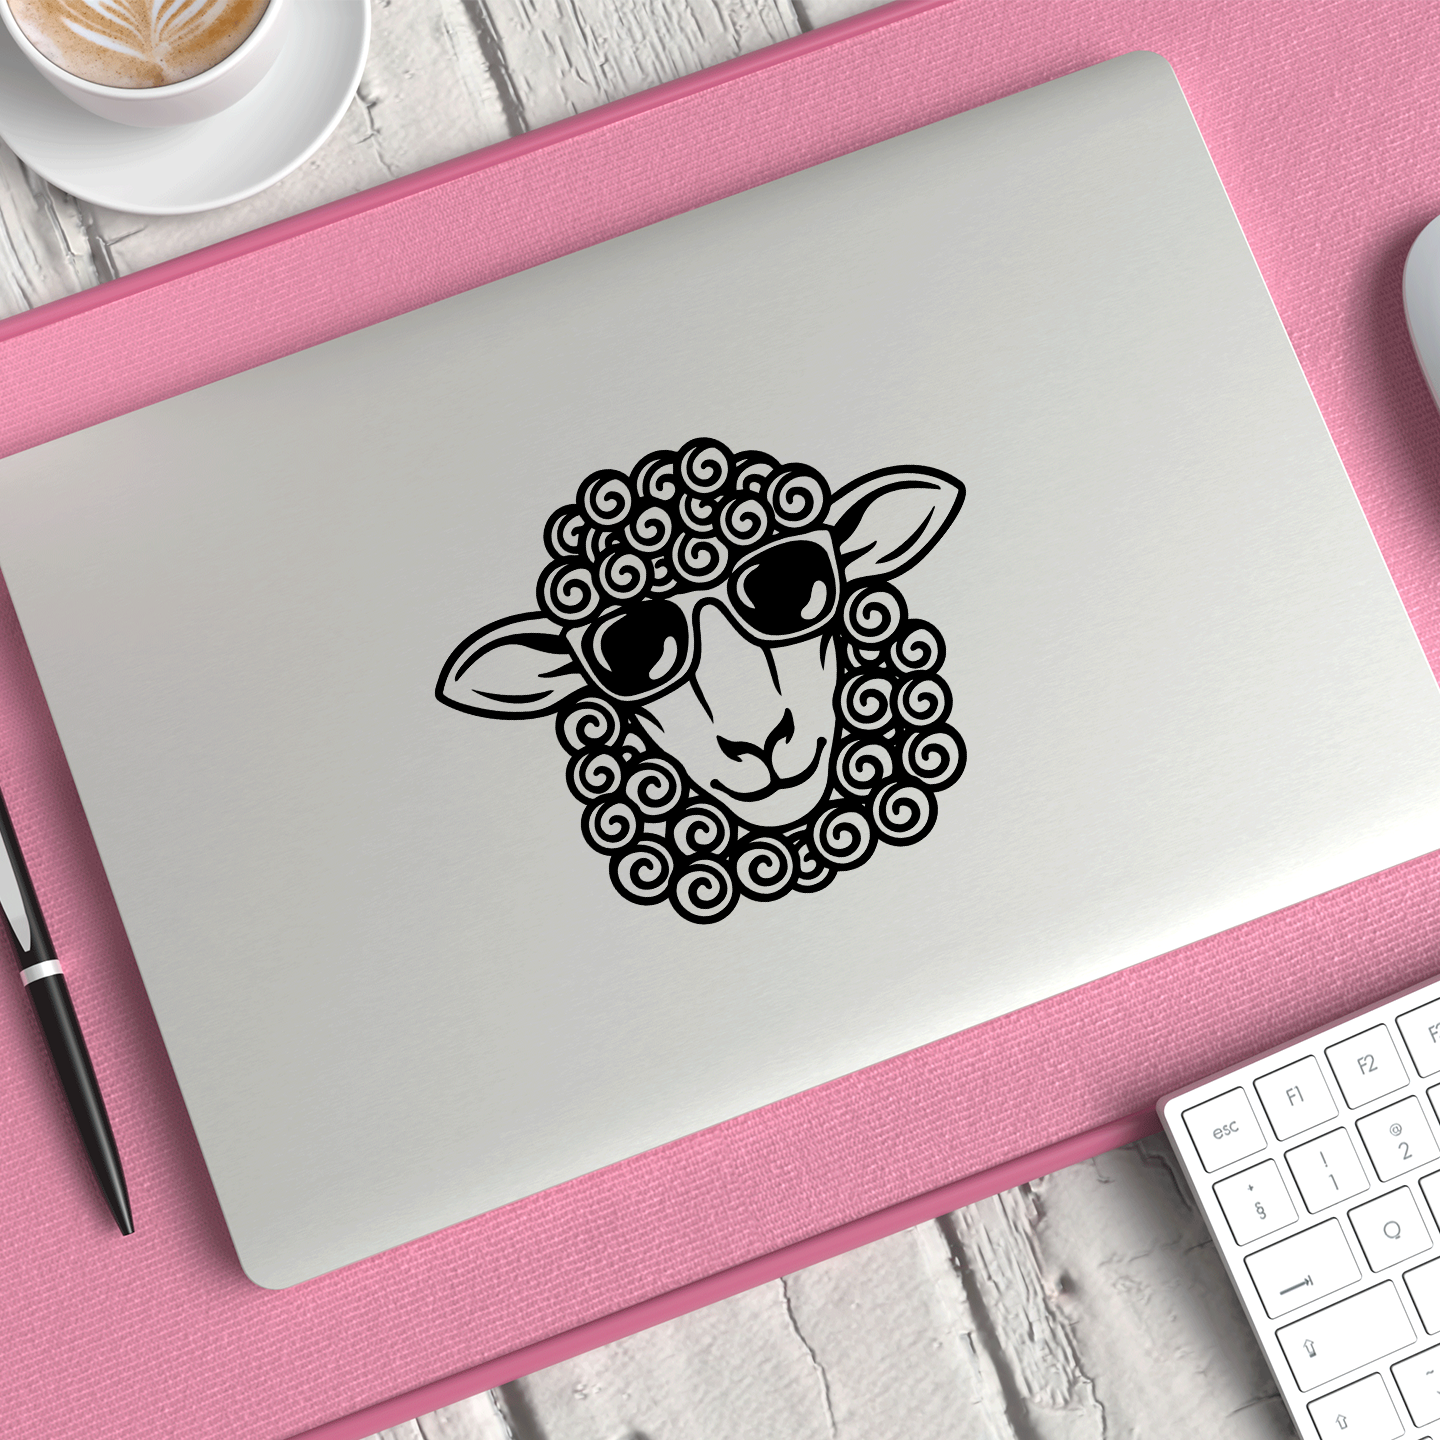 Curly Sheep Sticker